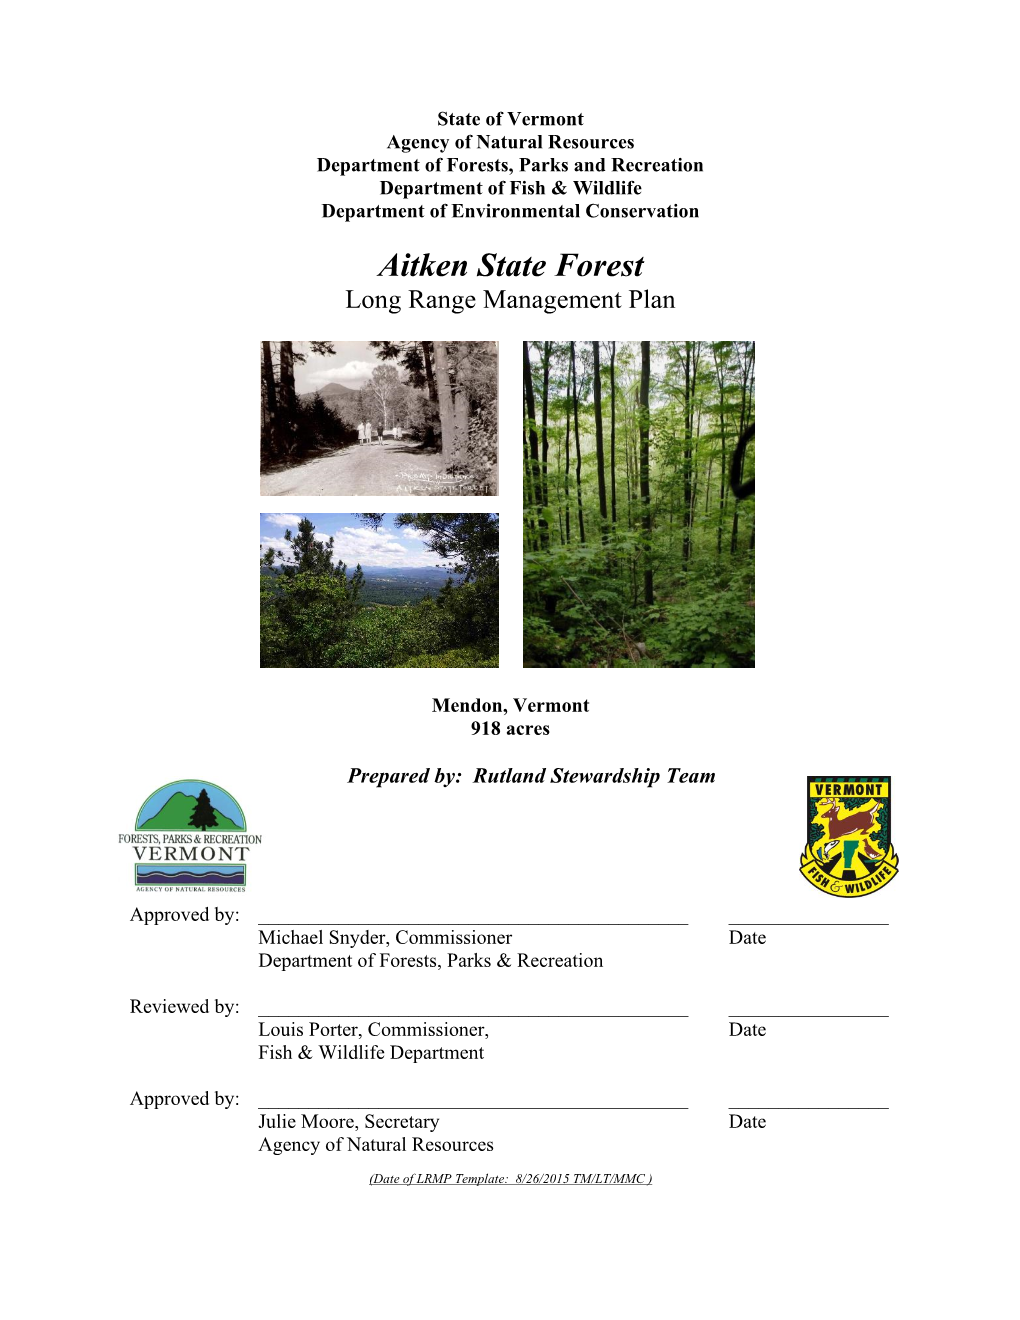 Aitken State Forest Long Range Management Plan